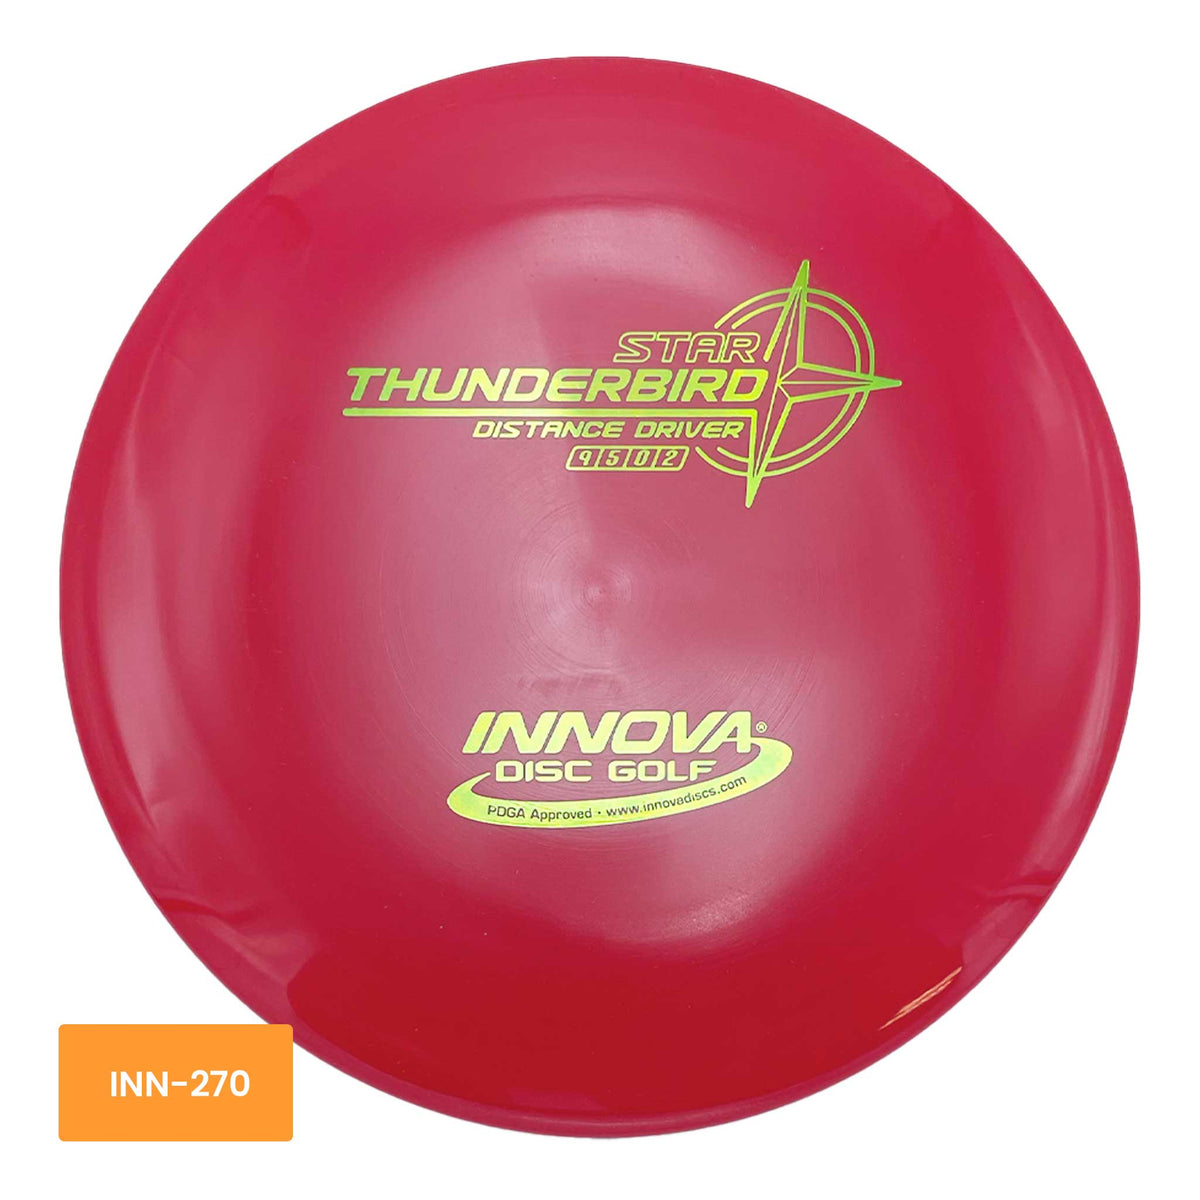 Innova Disc Golf Star Thunderbird distance driver - Red